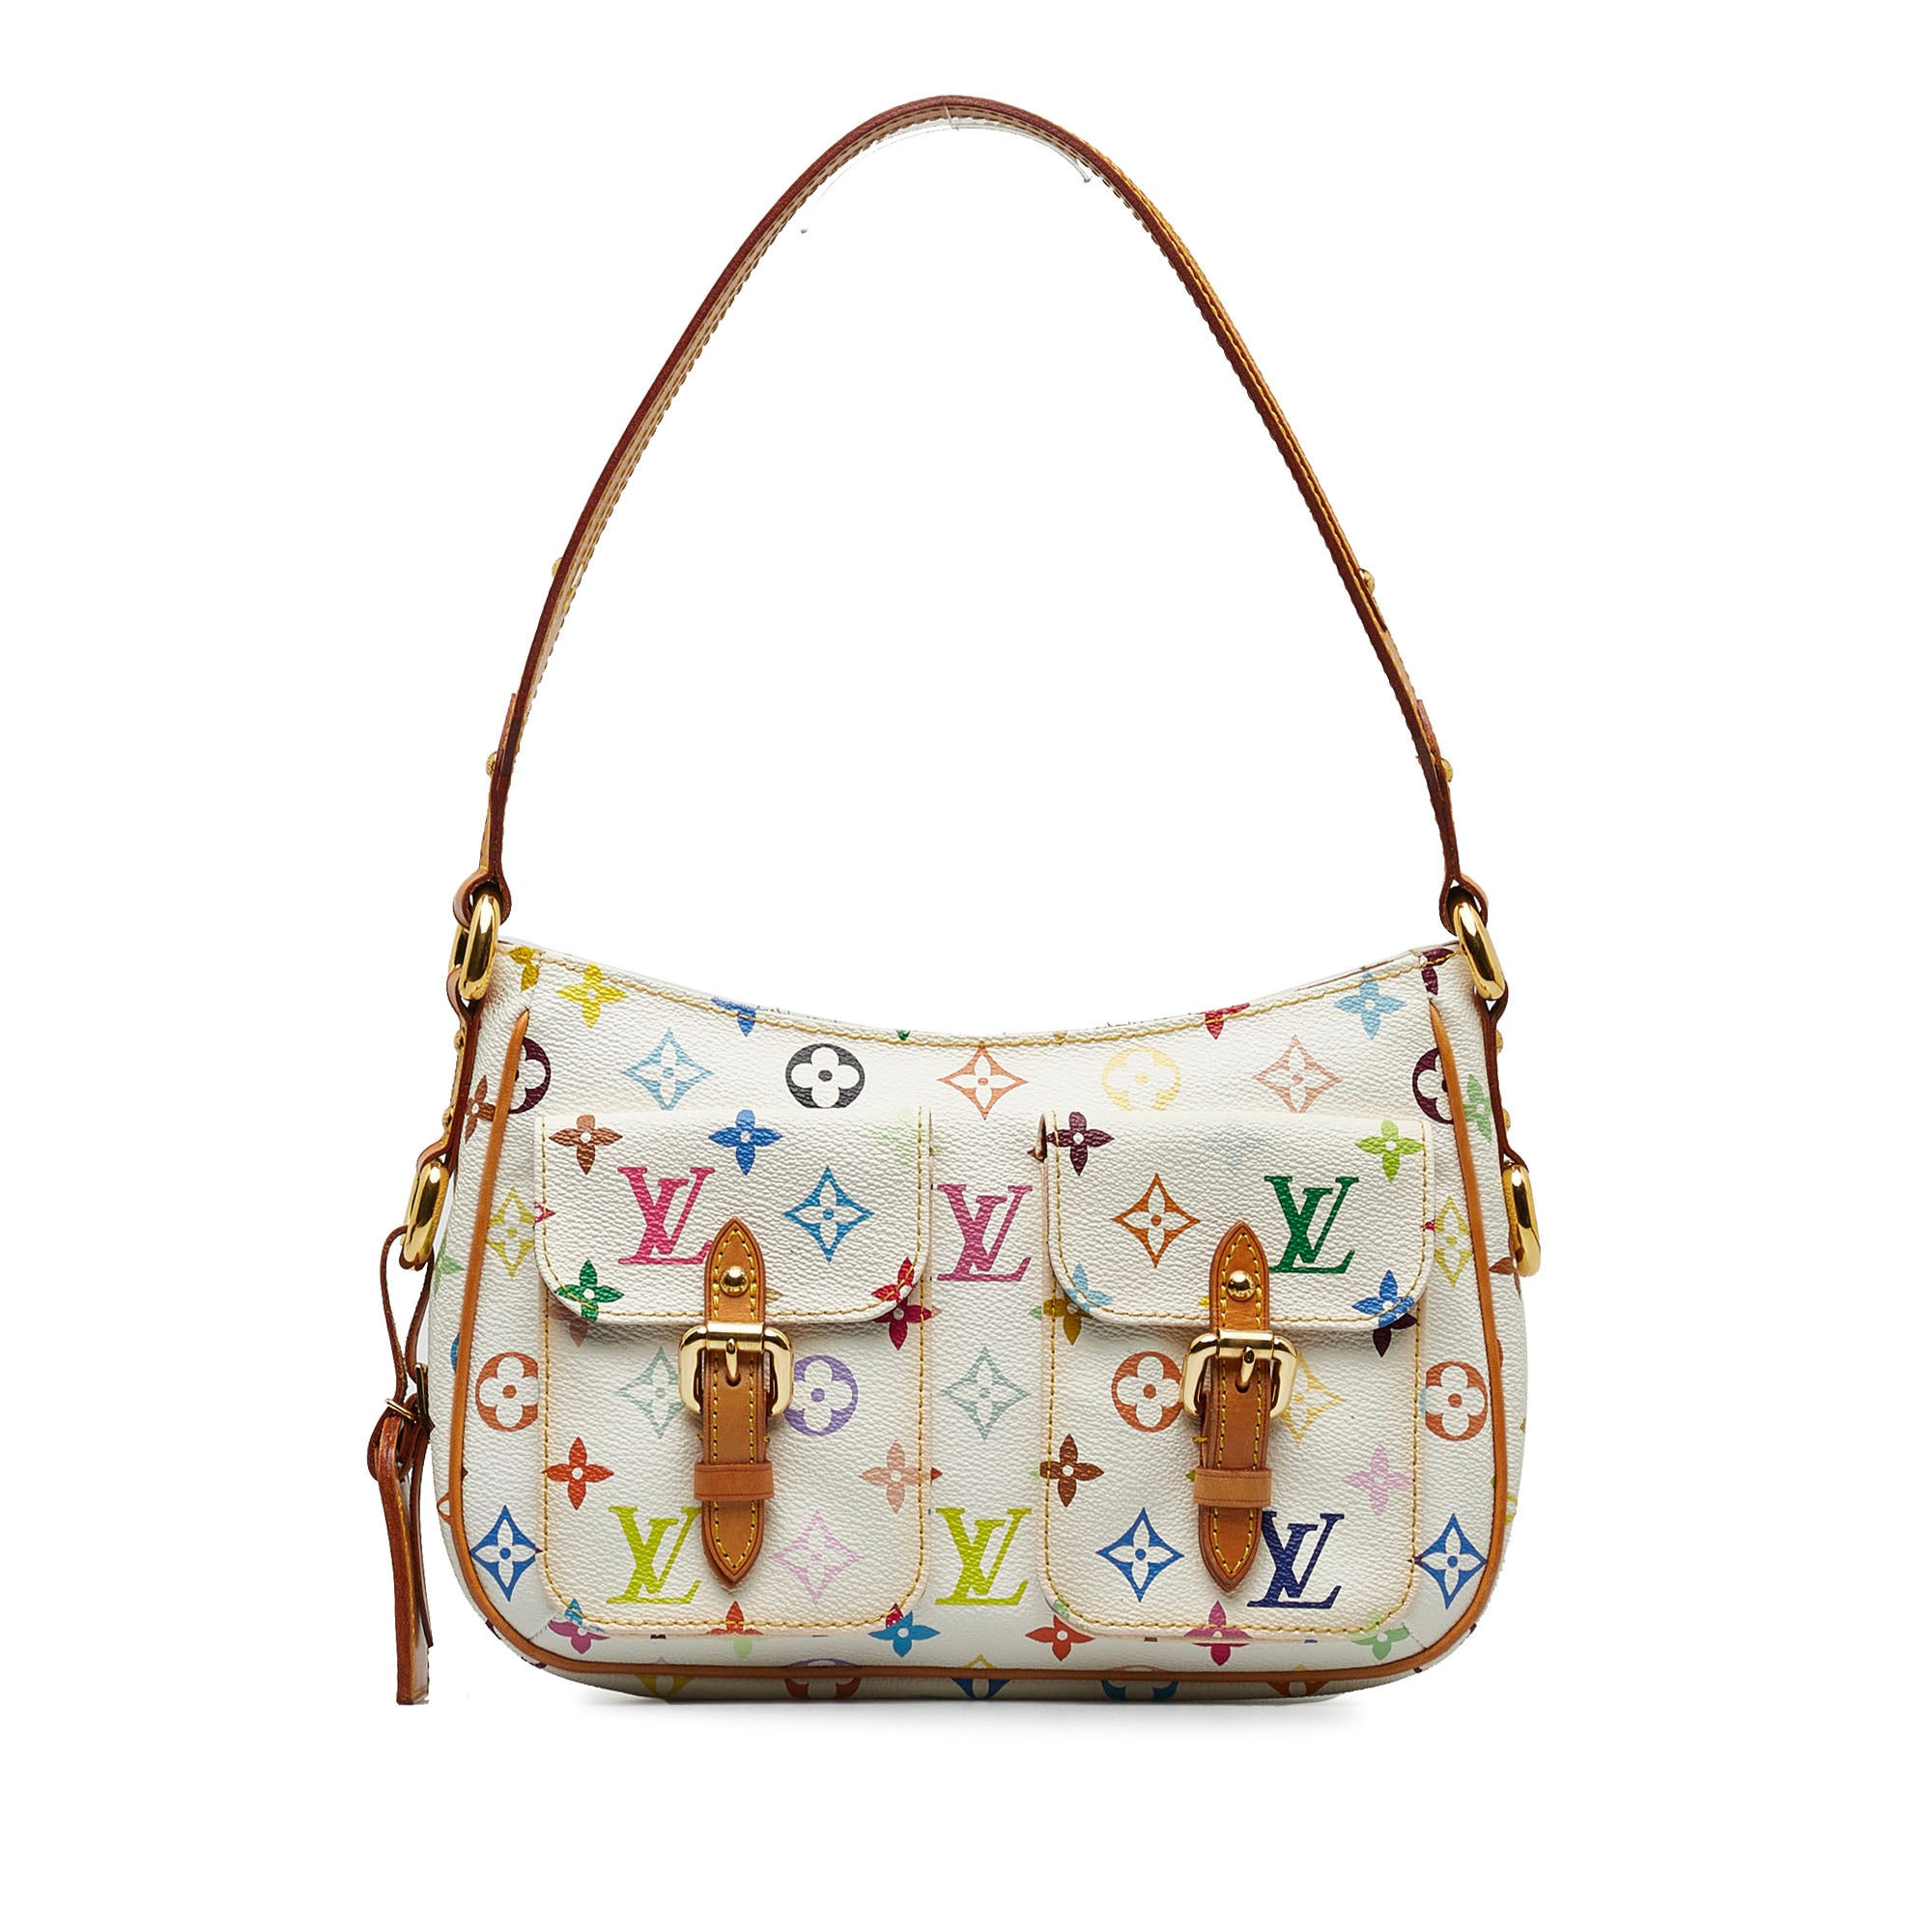 DONE with my Louis Vuitton Multicolor Handbags 